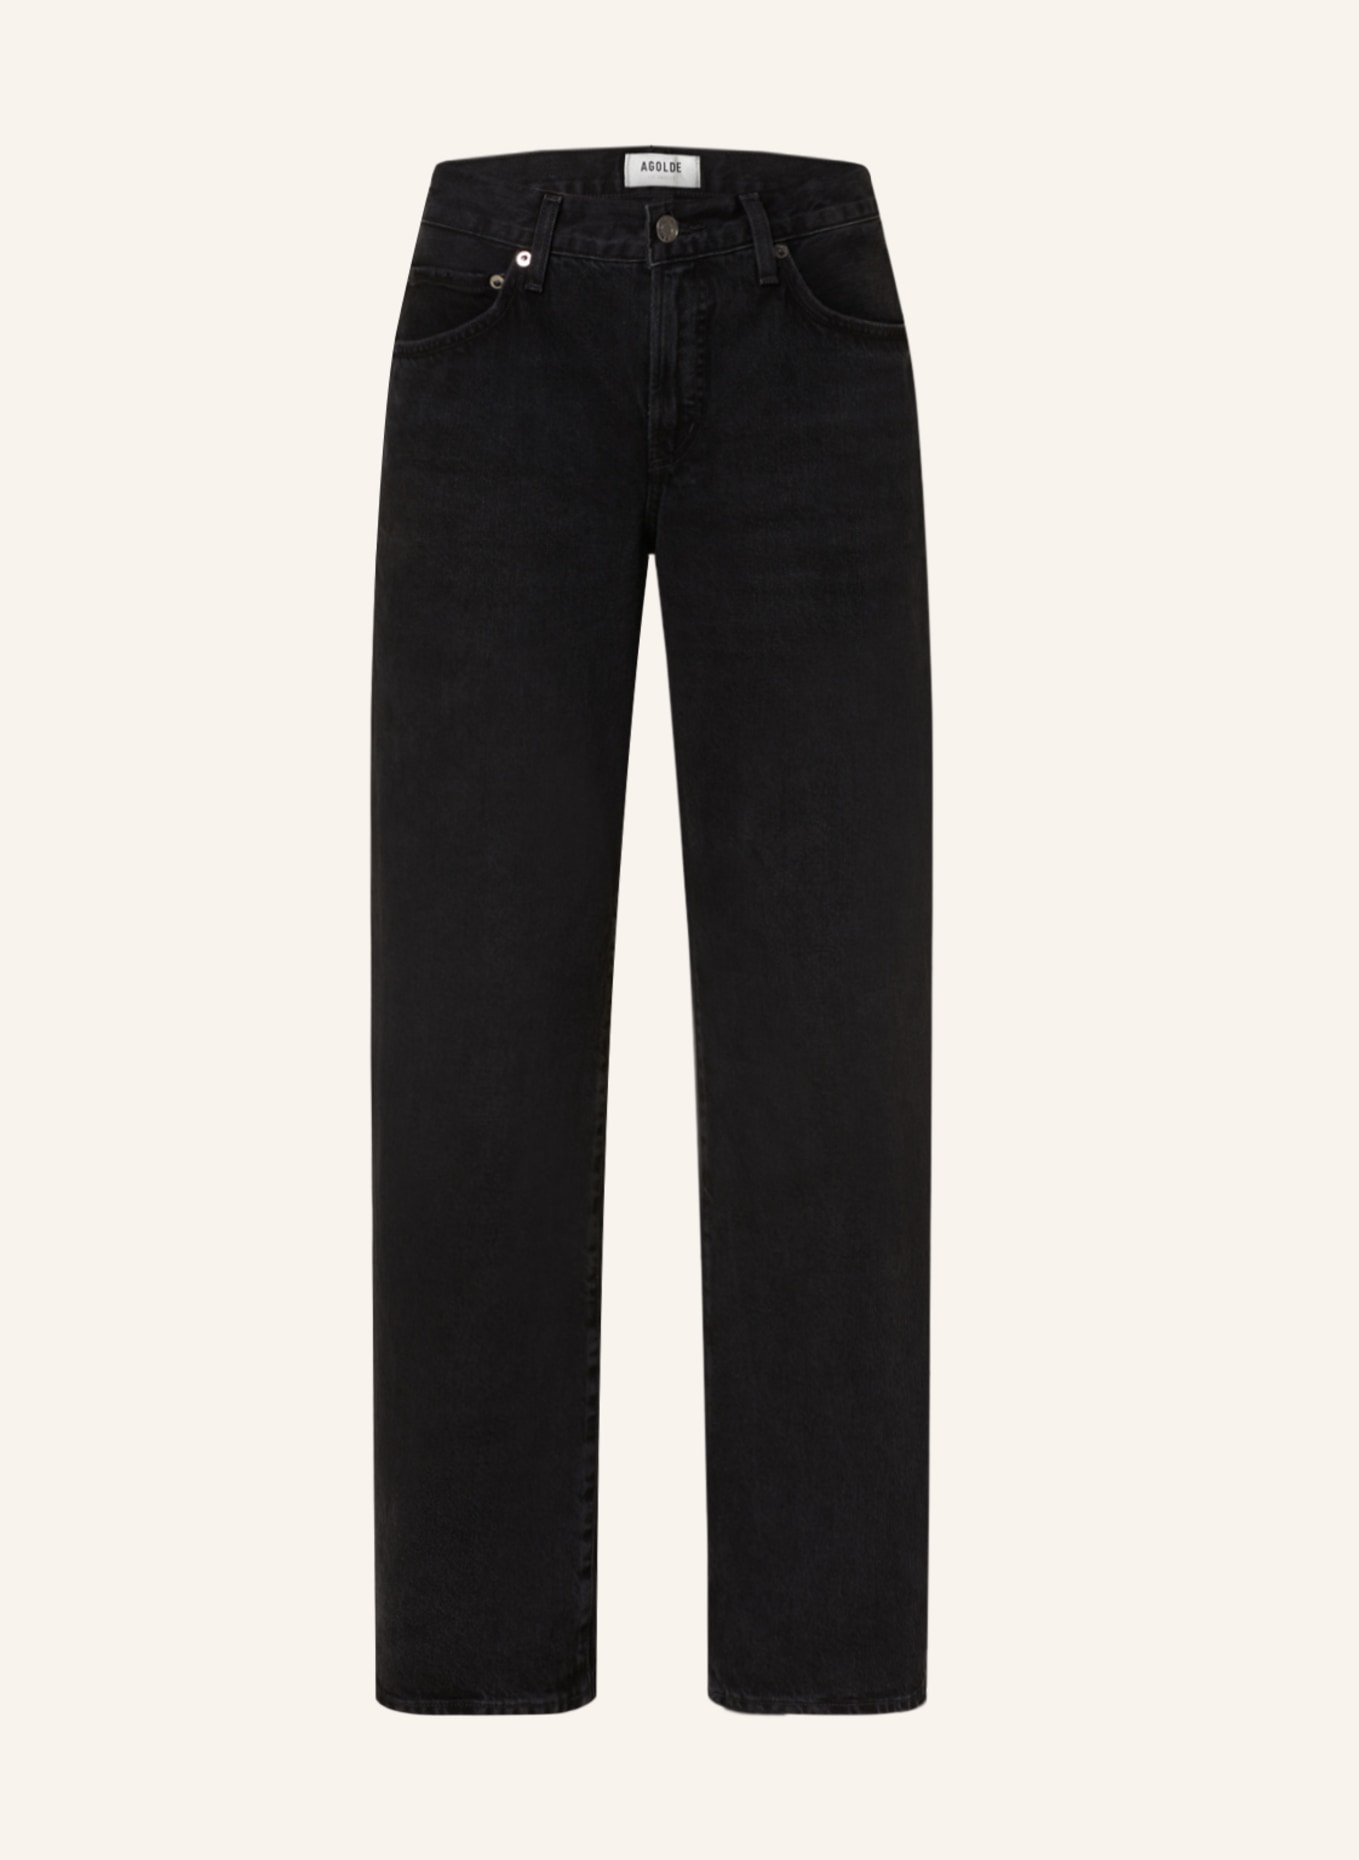 AGOLDE Jeans FUSION, Farbe: mascara  washed black (Bild 1)